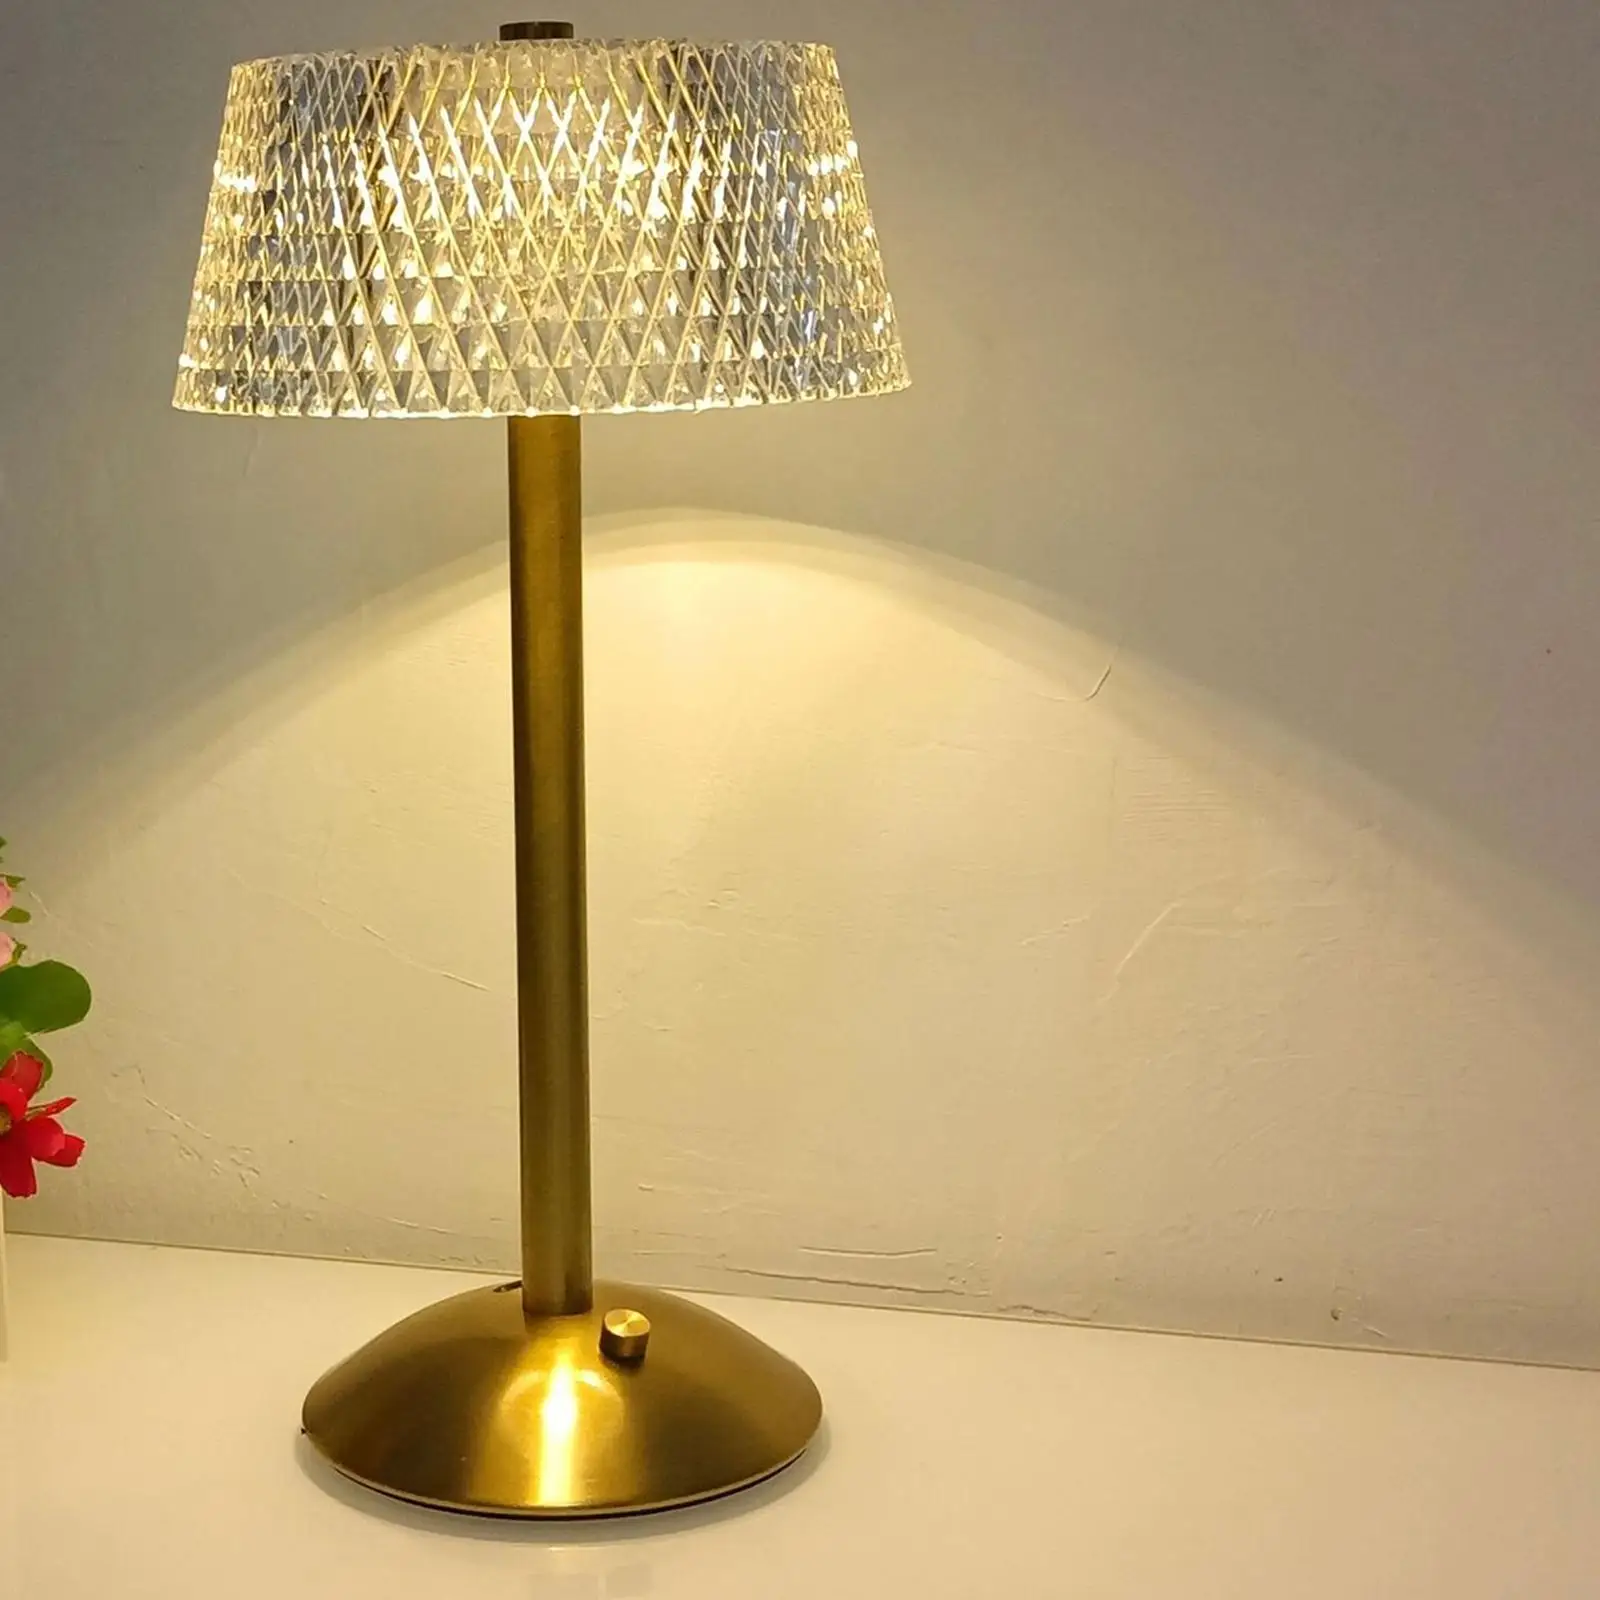  Lamp Light Adjustable  Luxury Eye Protection for Living Room Home Bedside Restaurant Decor